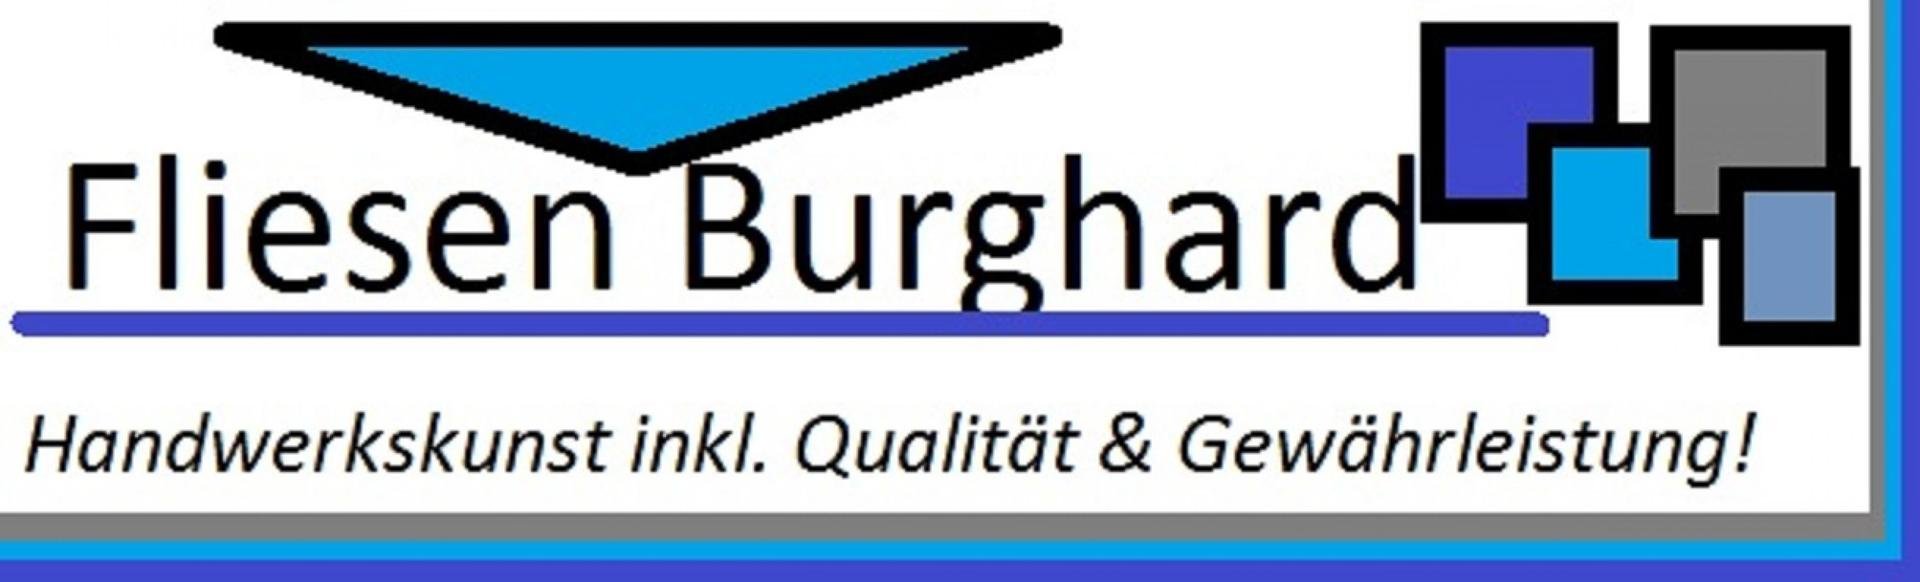 Fliesen Burghard Logo